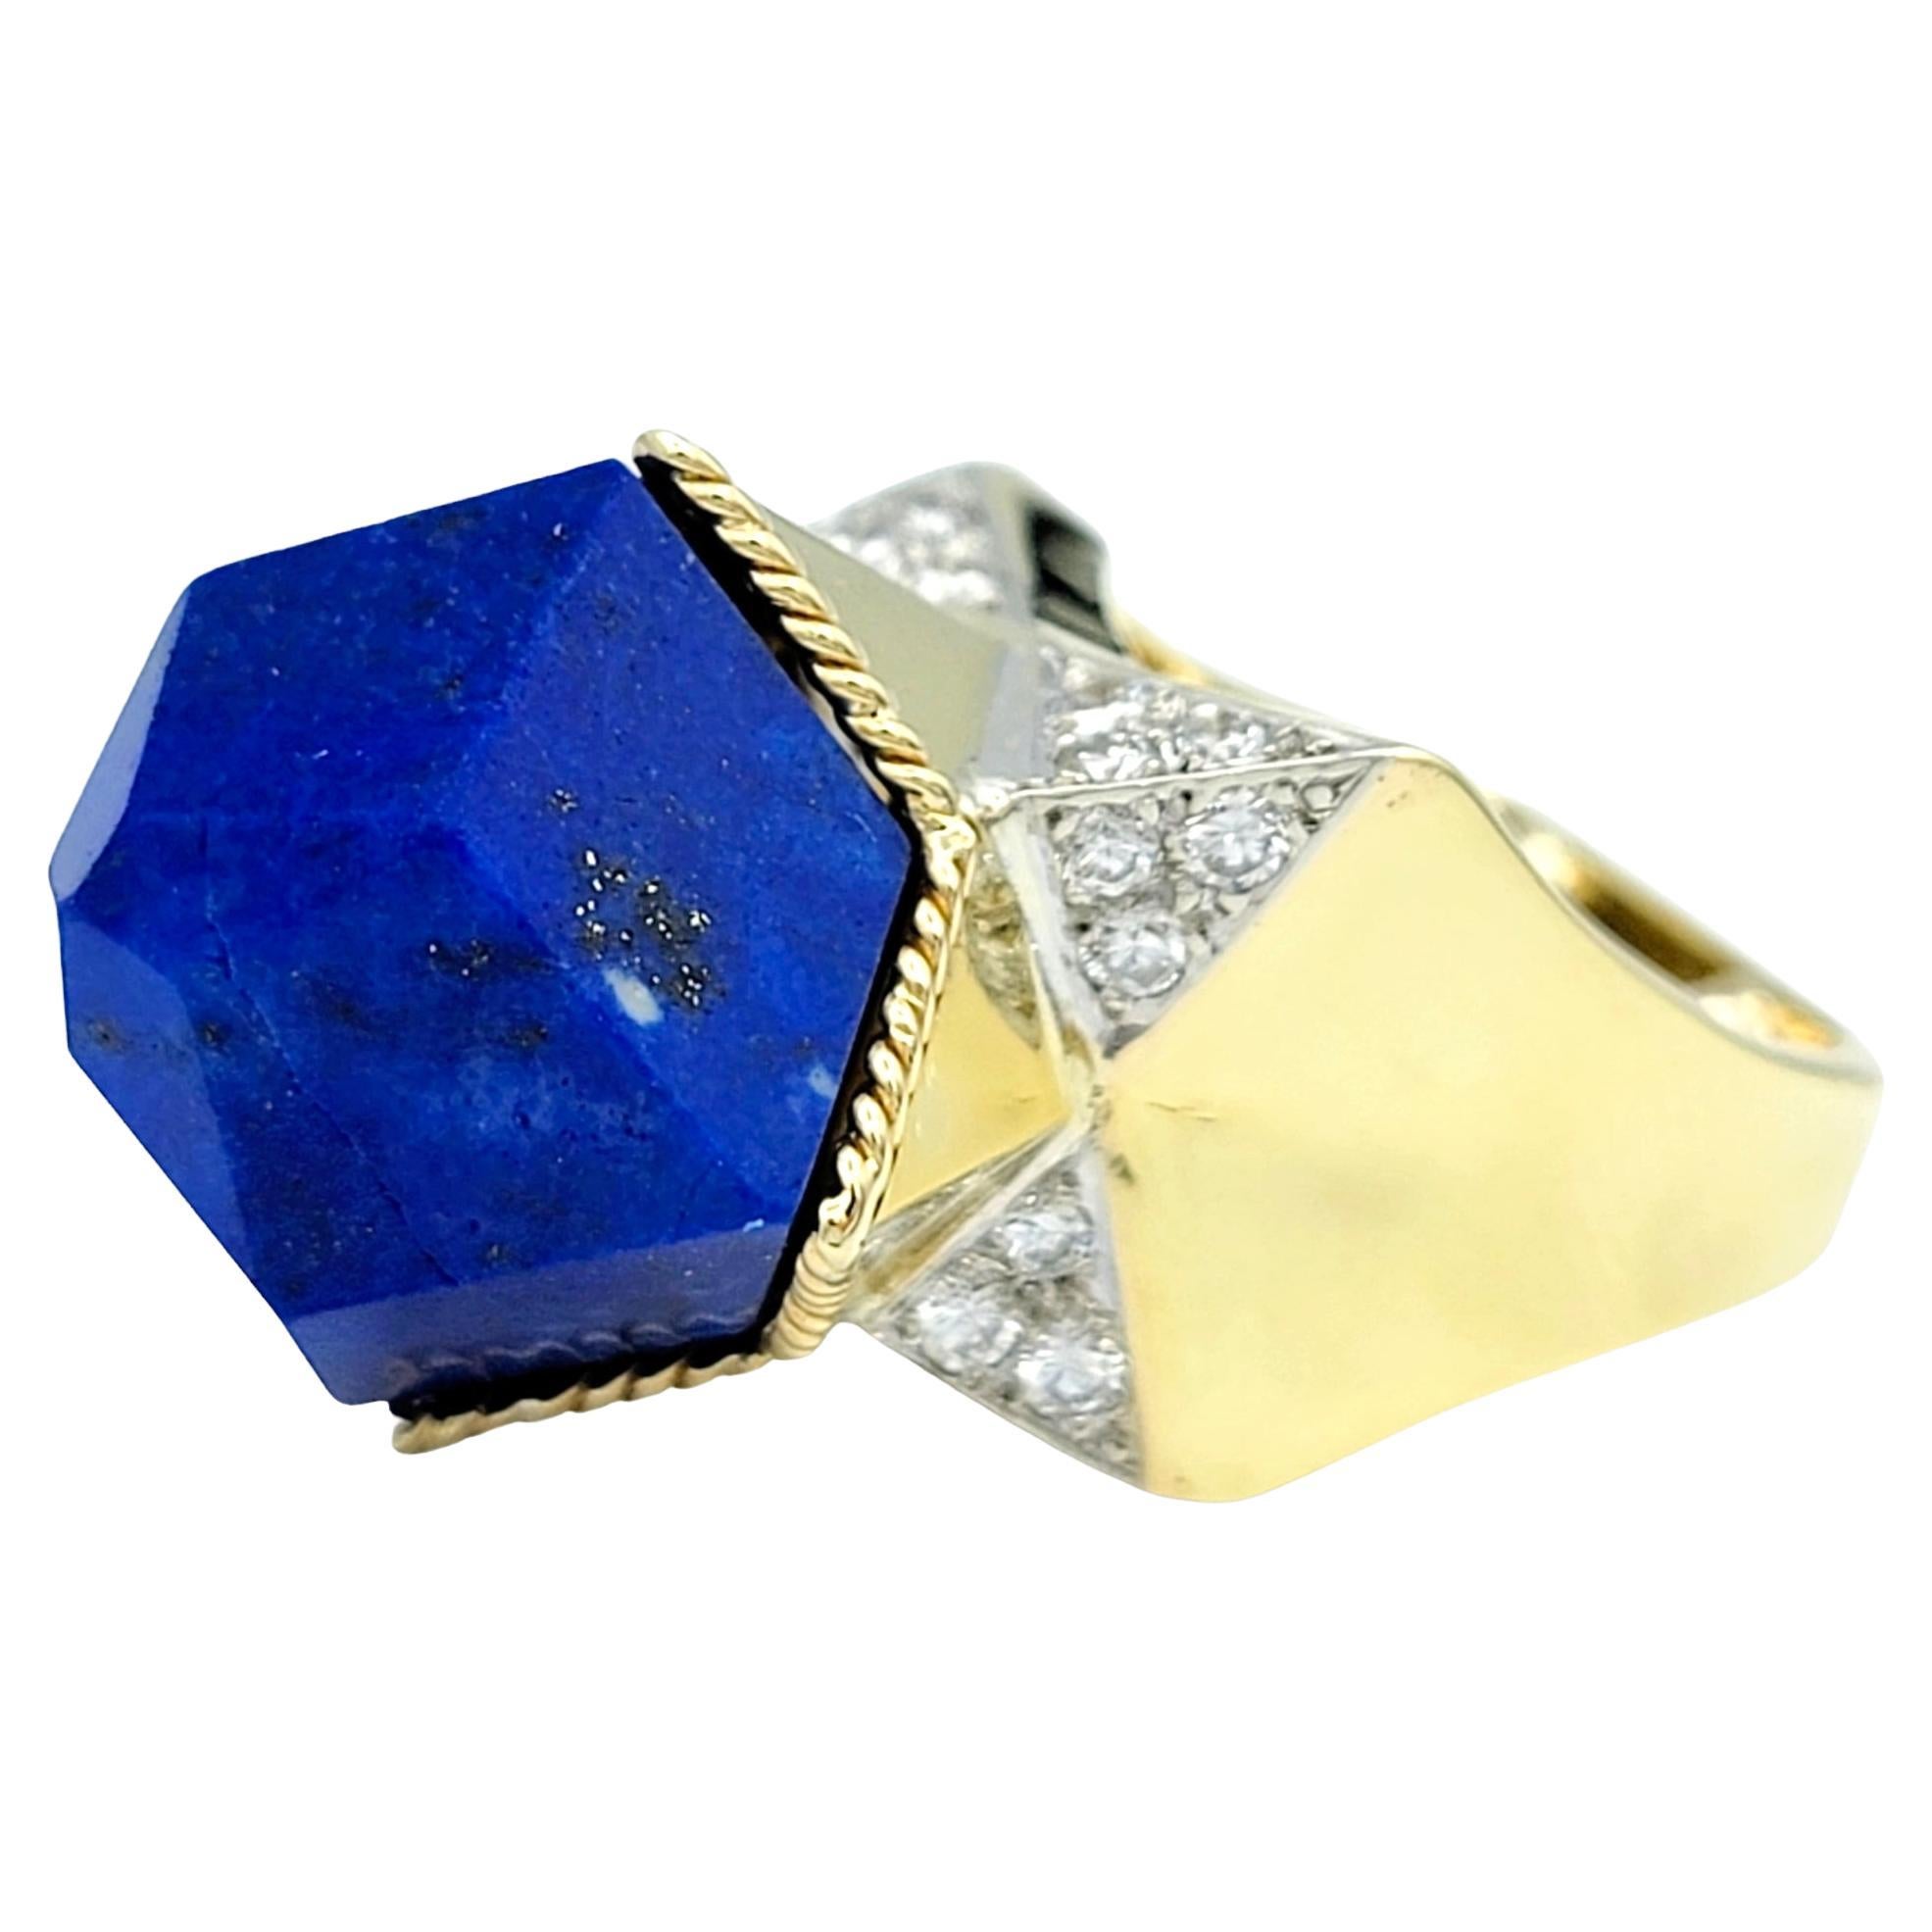 Blue Polygon Lapis Lazuli and Diamond Cocktail Ring Set in 18 Karat Yellow Gold